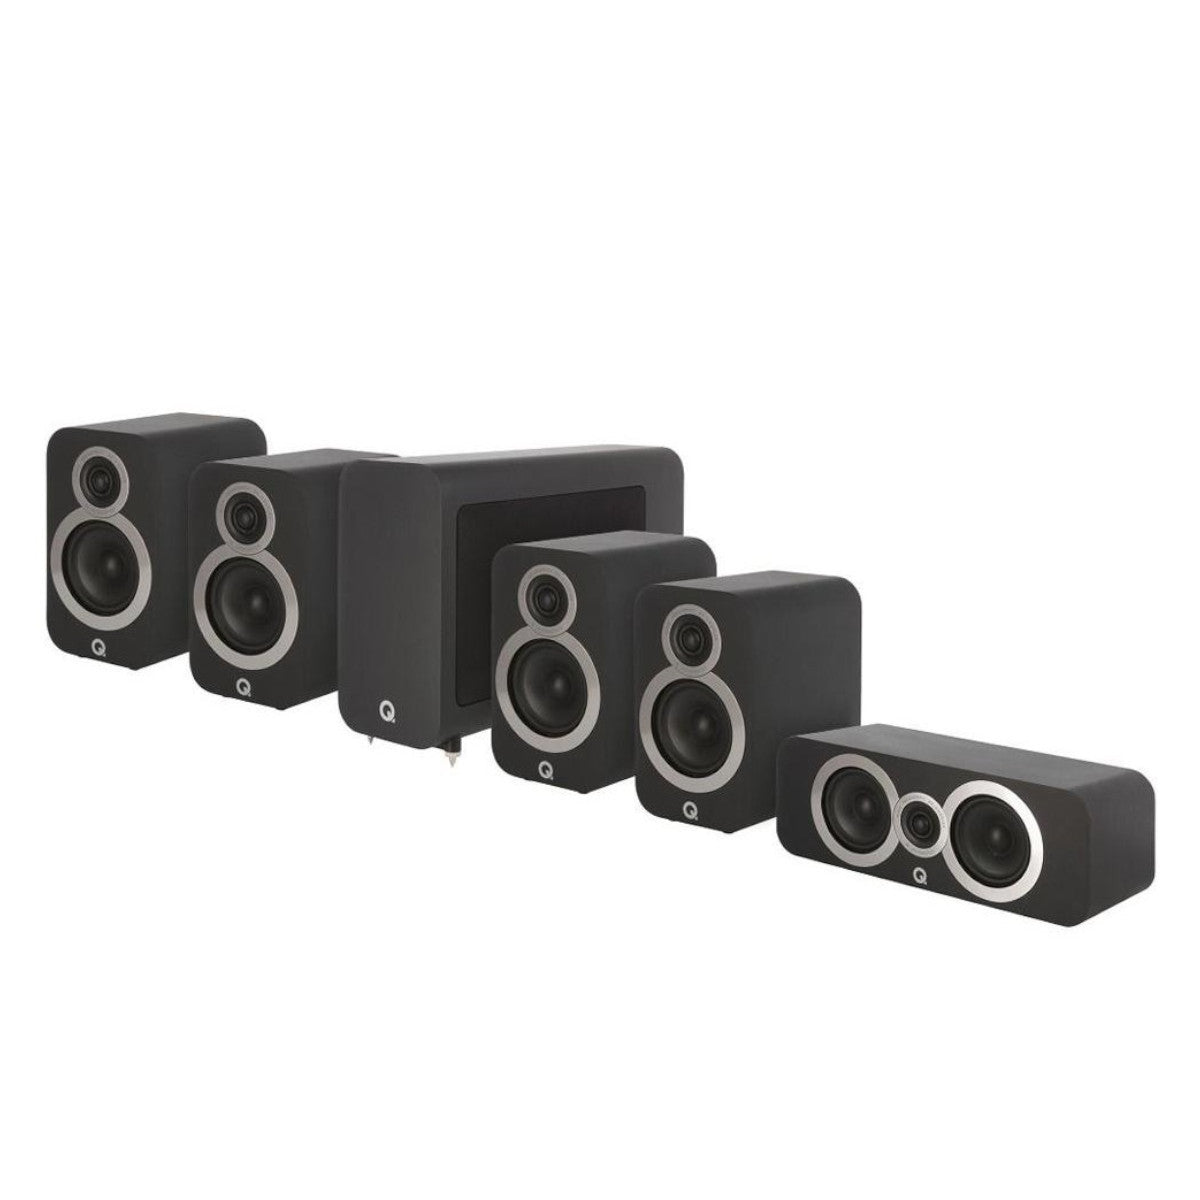 Q Acoustics 3010i Cinema 5.1 Channel Speaker Package - Ooberpad